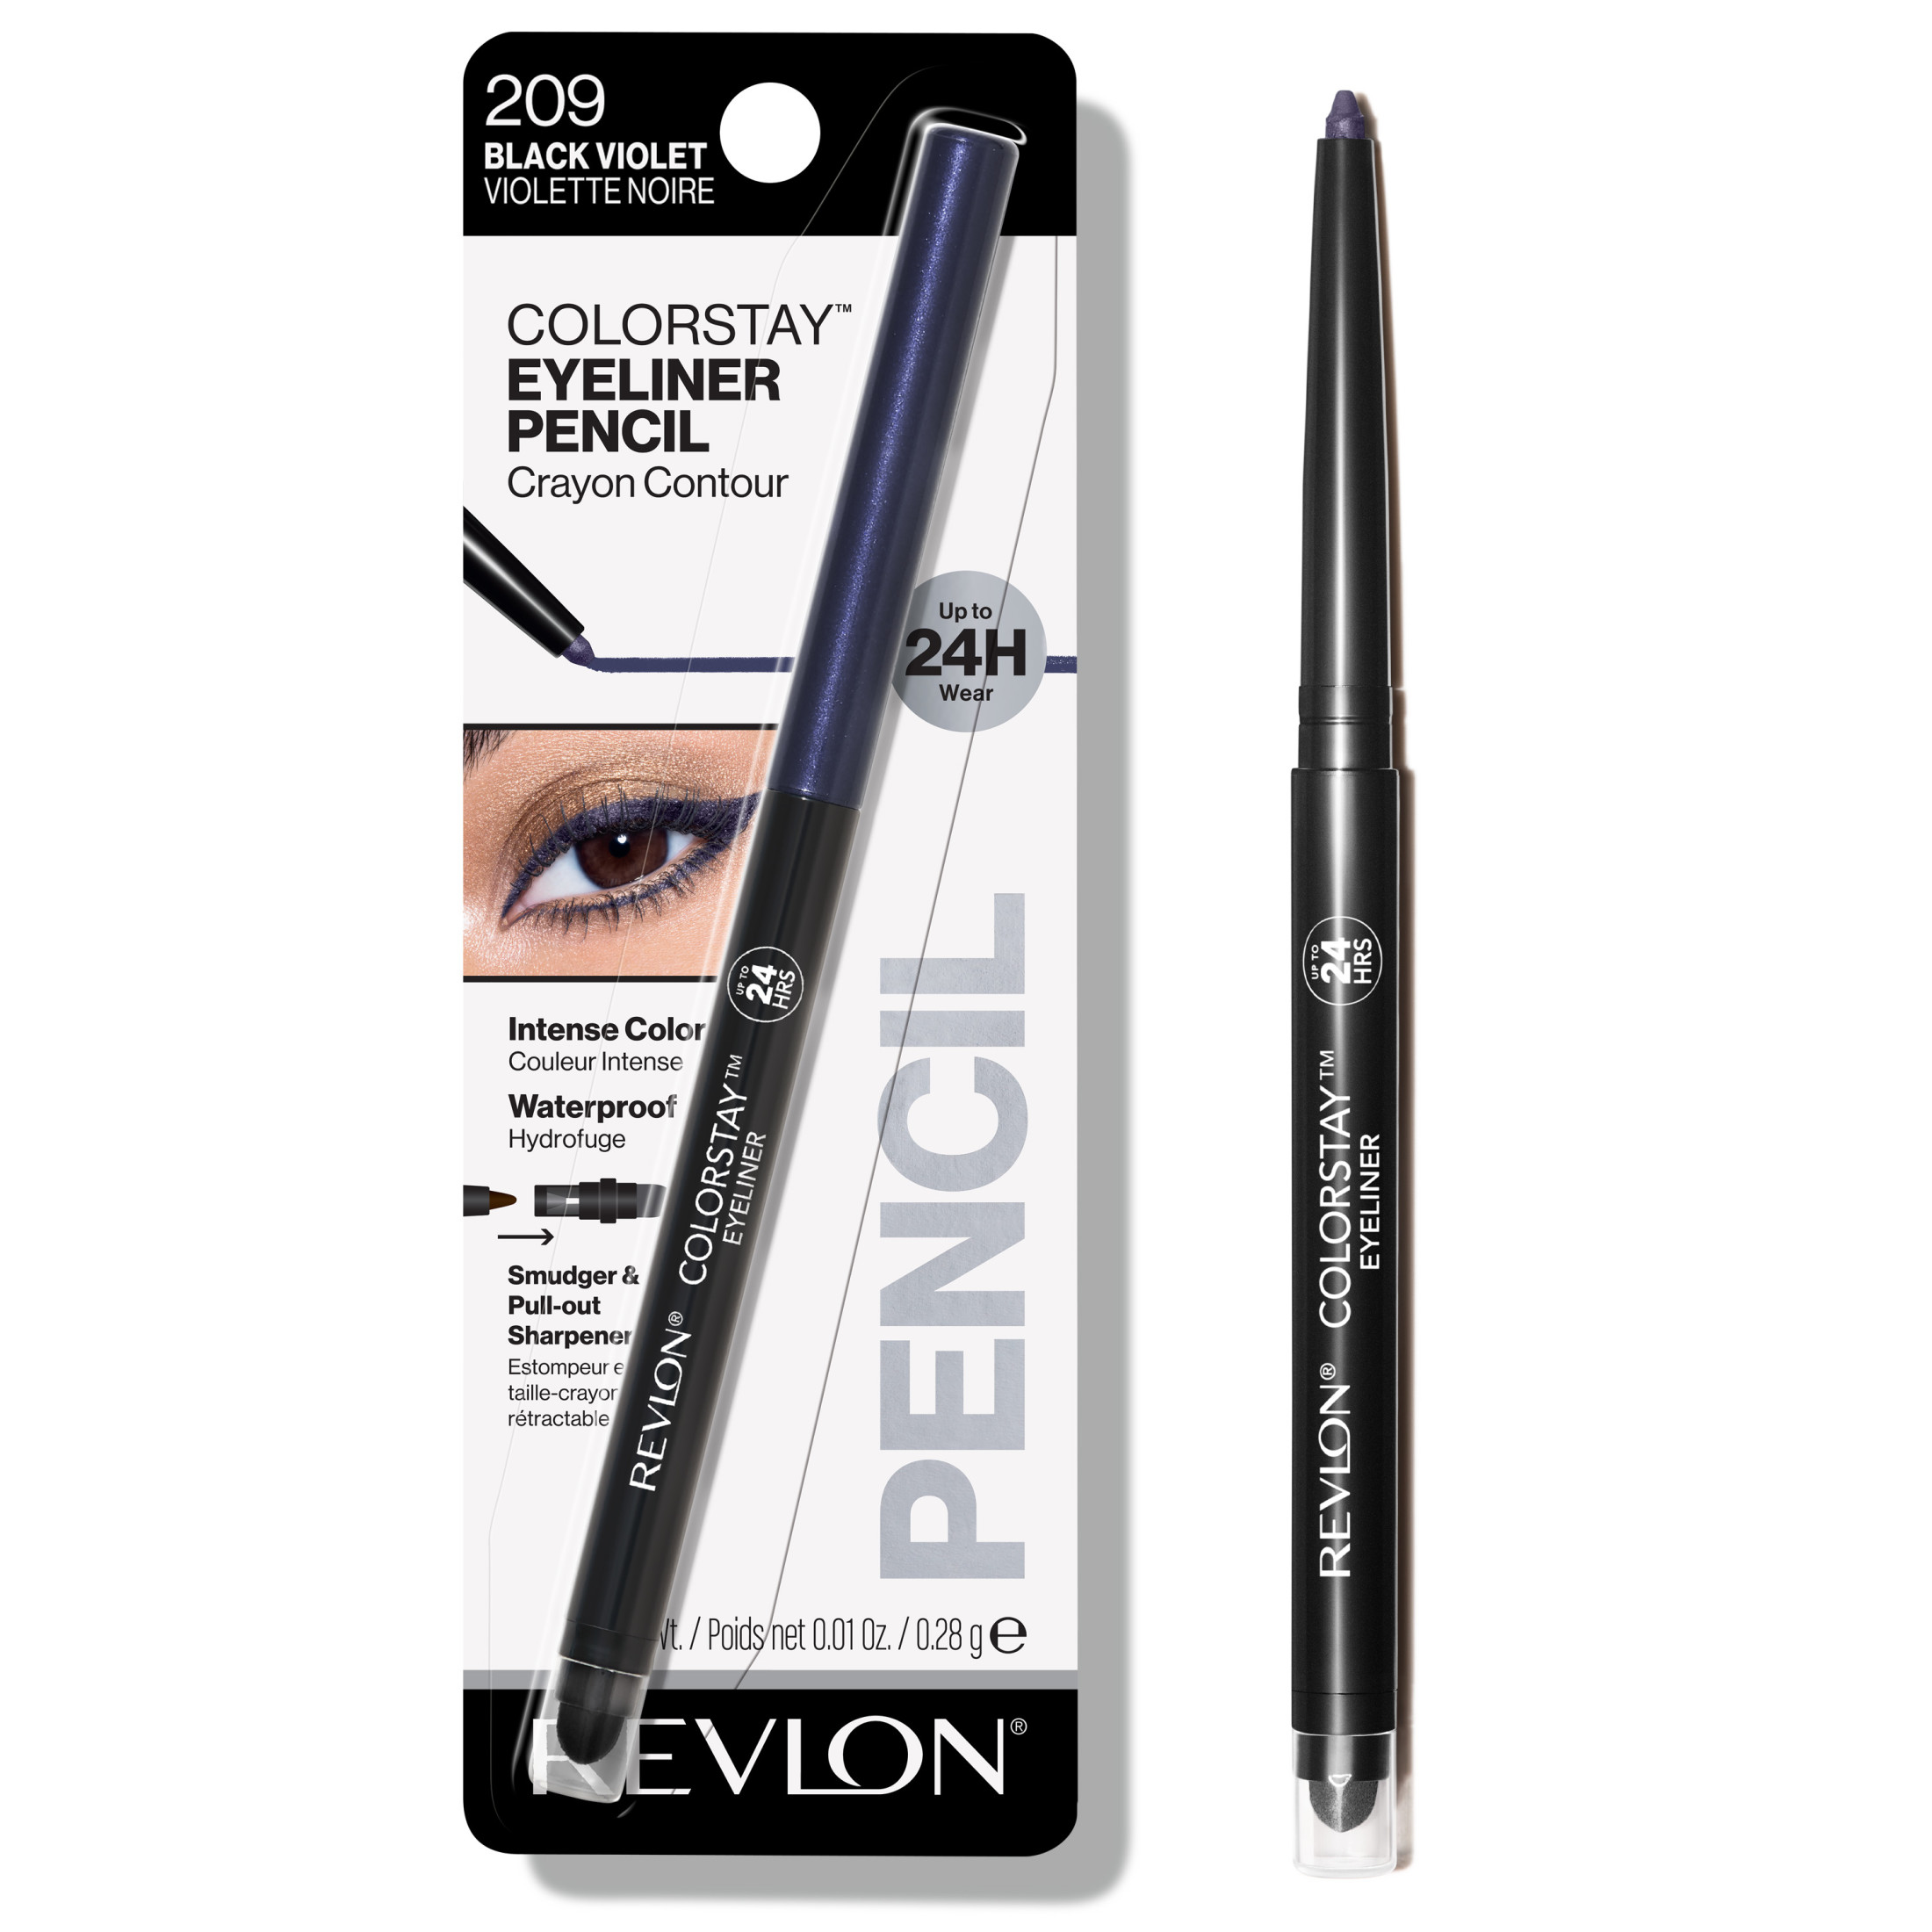 Revlon ColorStay Waterproof Eyeliner Pencil, 24HR Wear, Built-in Sharpener, 209 Black Violet, 0.01 oz - image 1 of 10